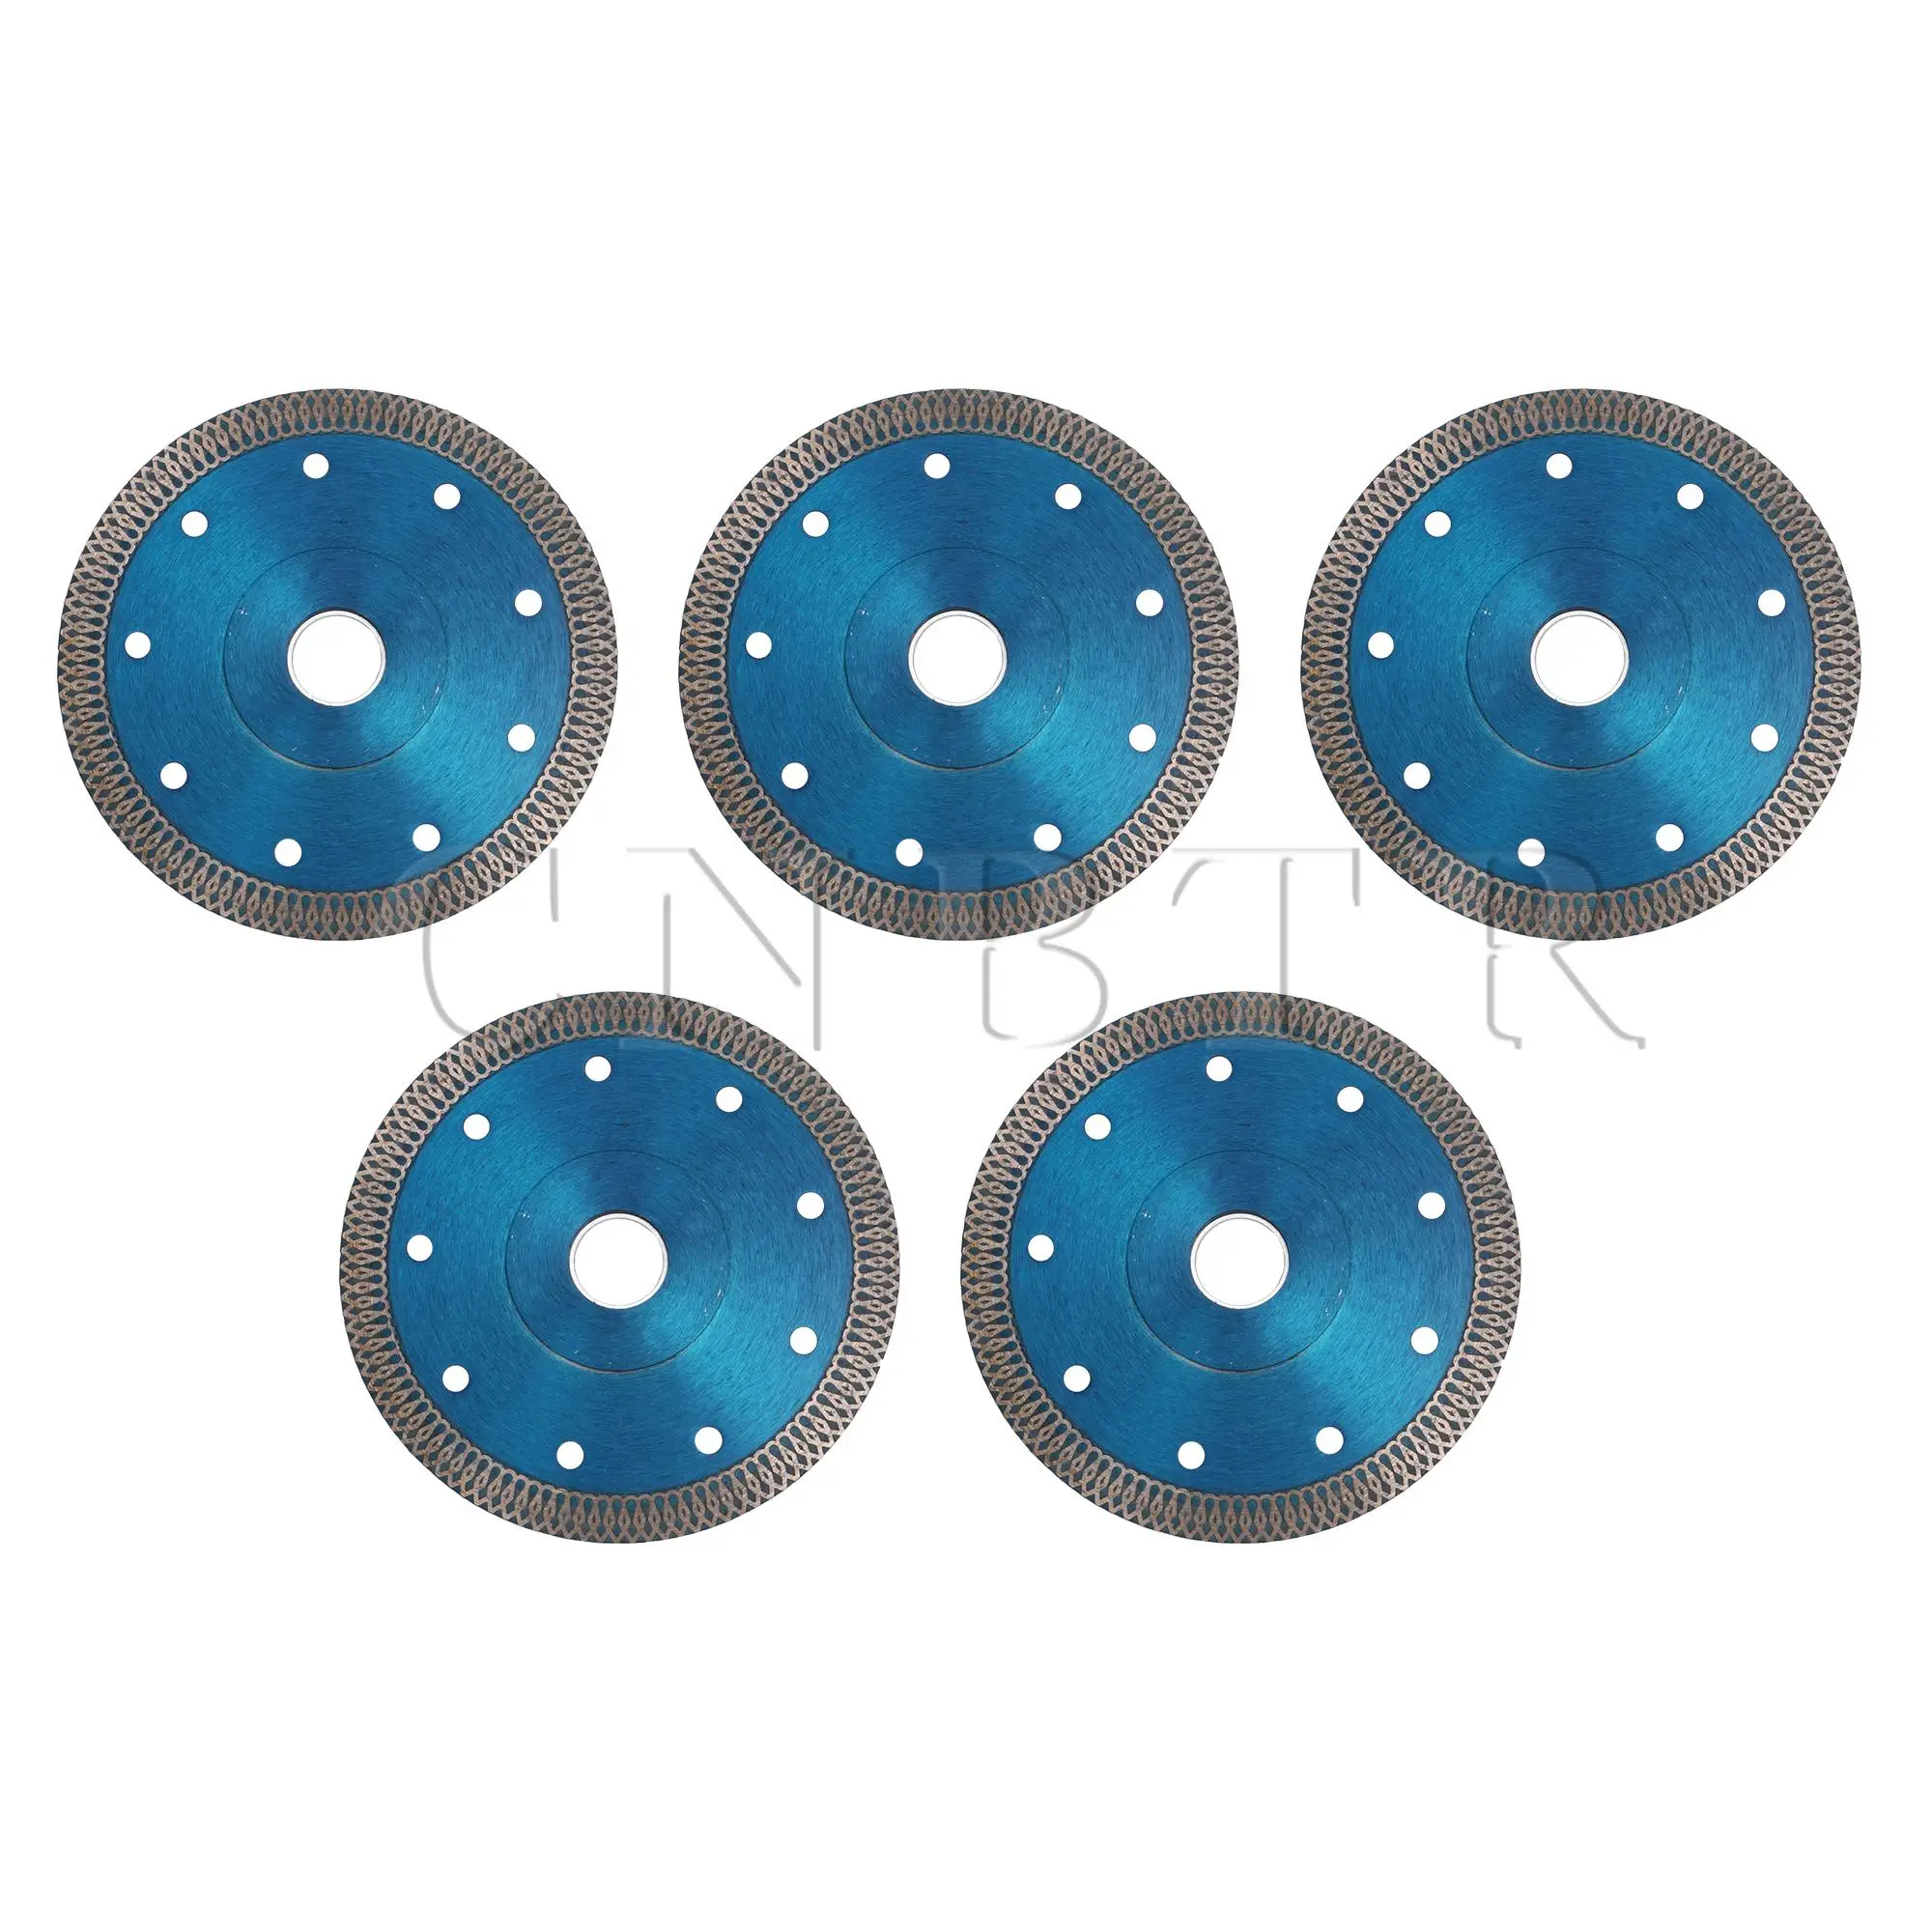 

CNBTR, 5 шт., 14500 об/мин, диски для круглой циркулярной пилы